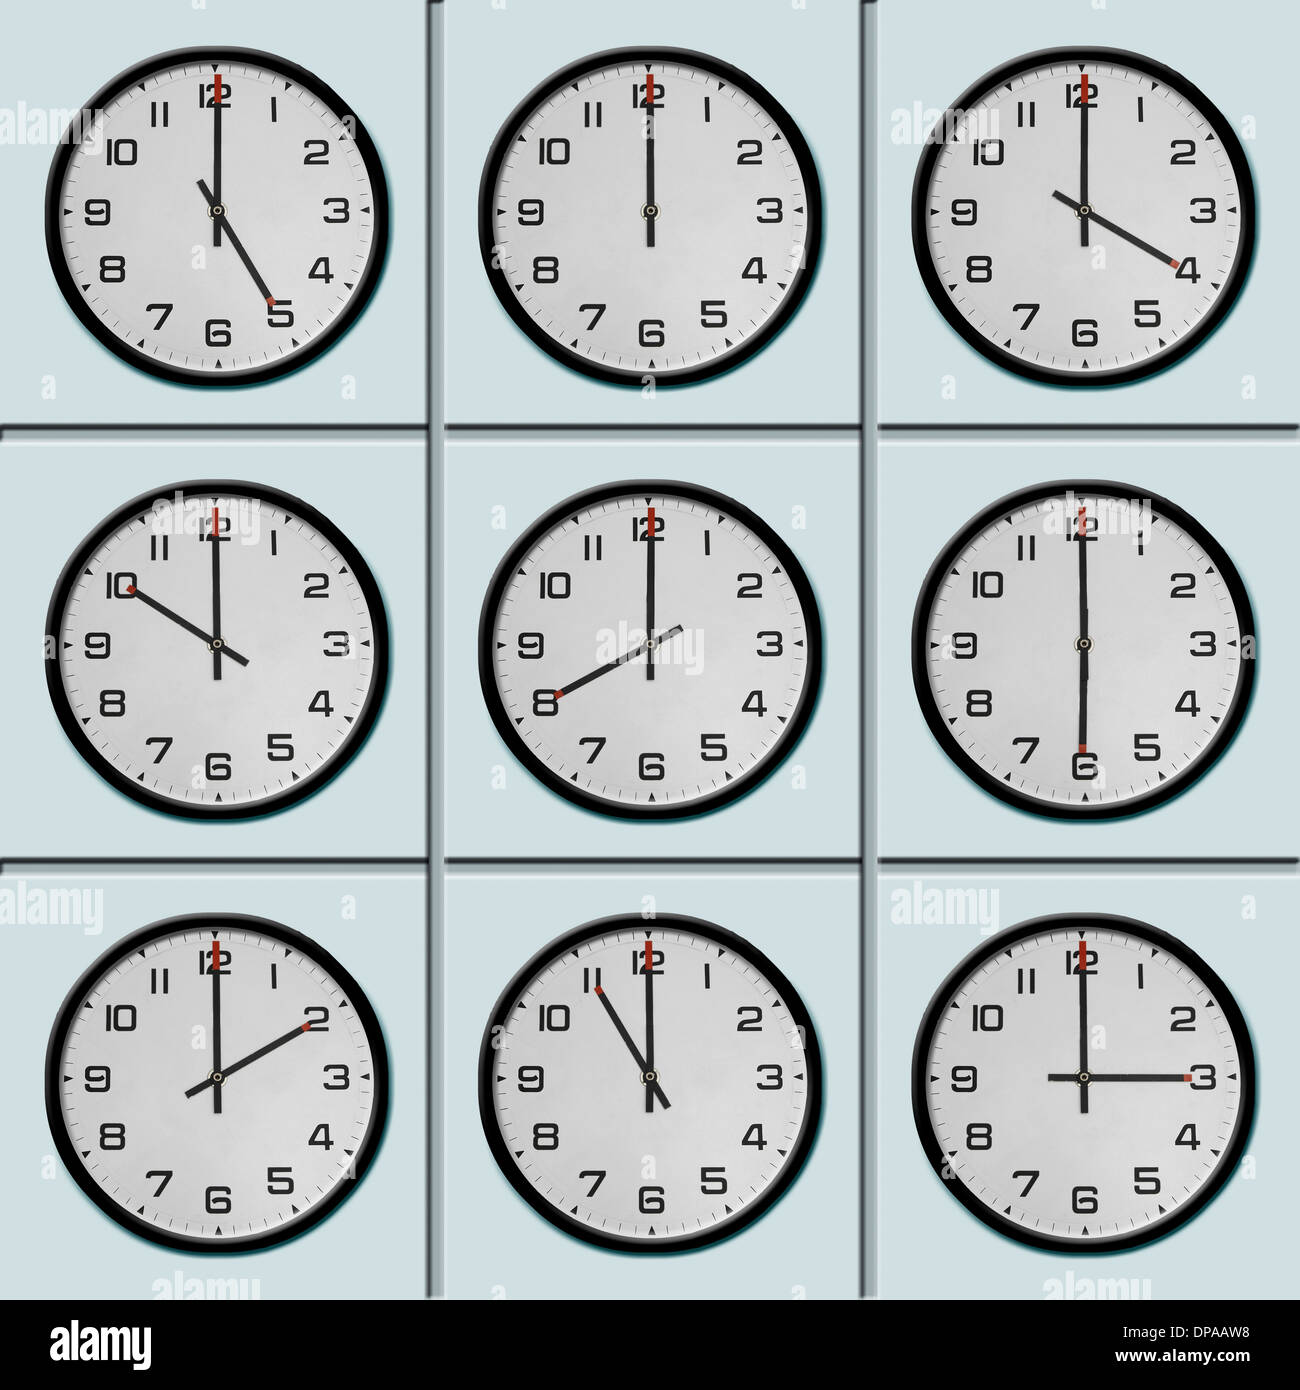 Relojes de zona horaria diferente fotografías e imágenes de alta resolución  - Alamy